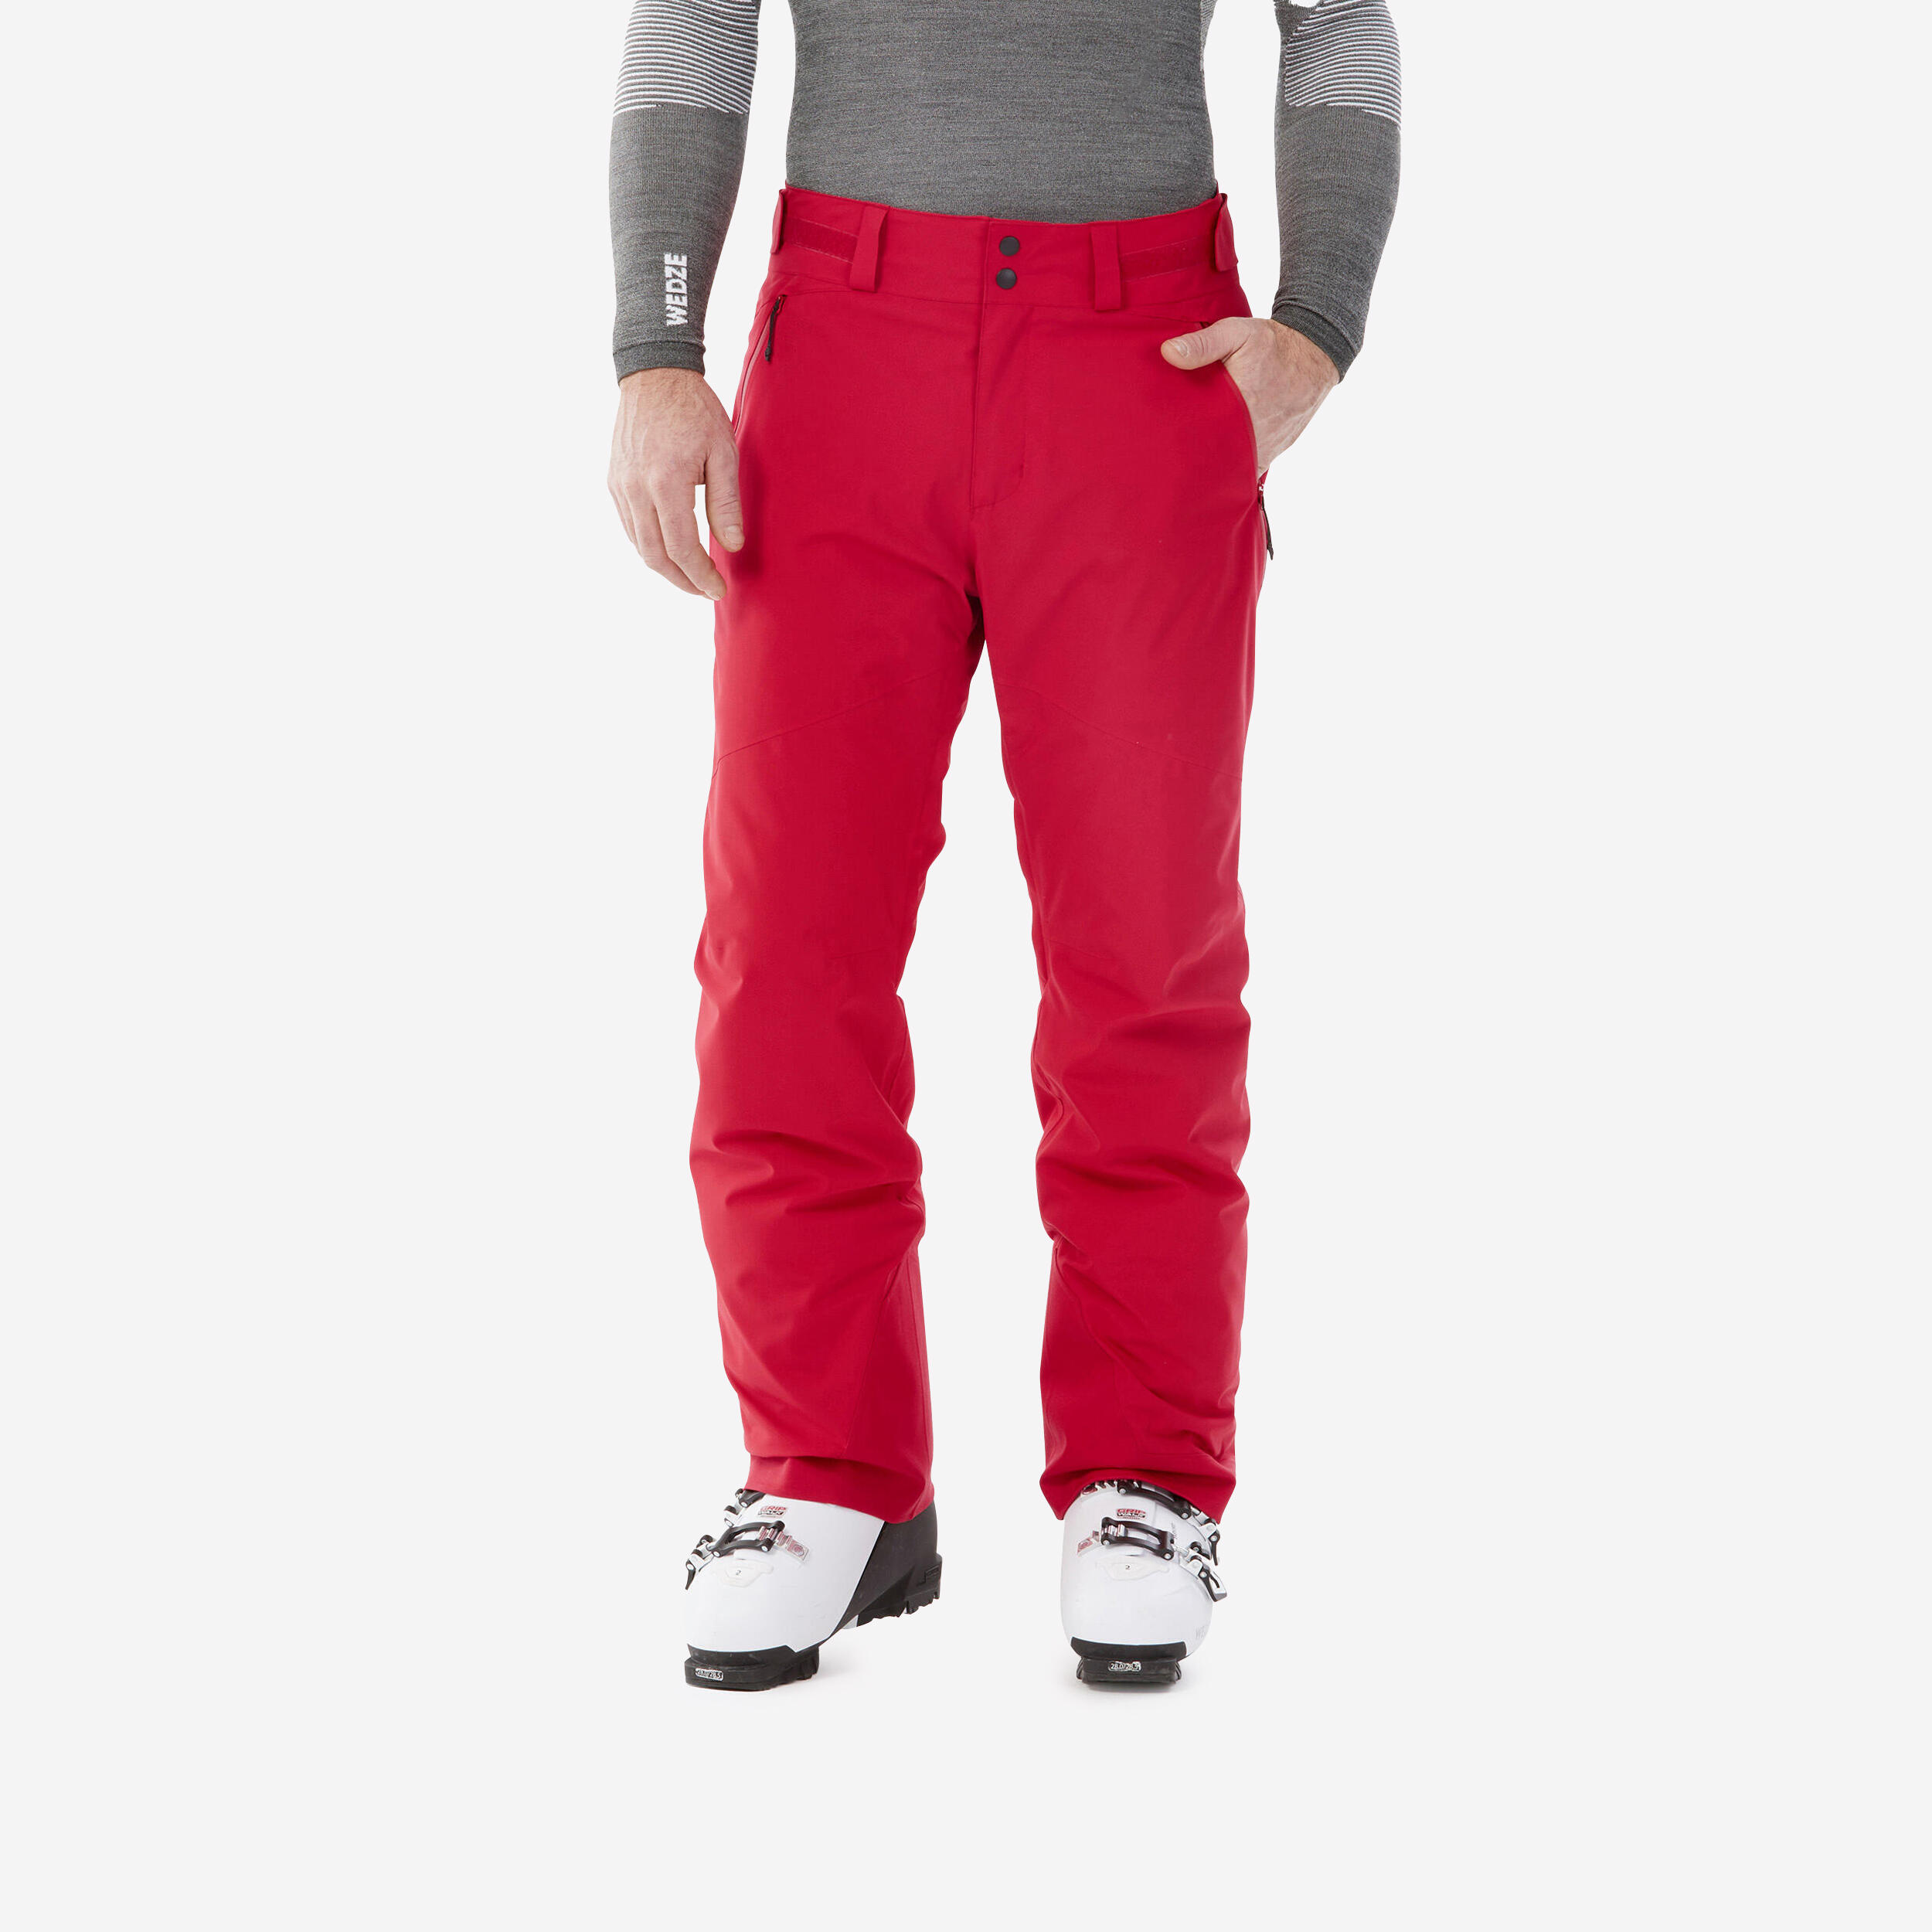 Men’s Warm Ski Trousers Regular 500 - Red 1/9